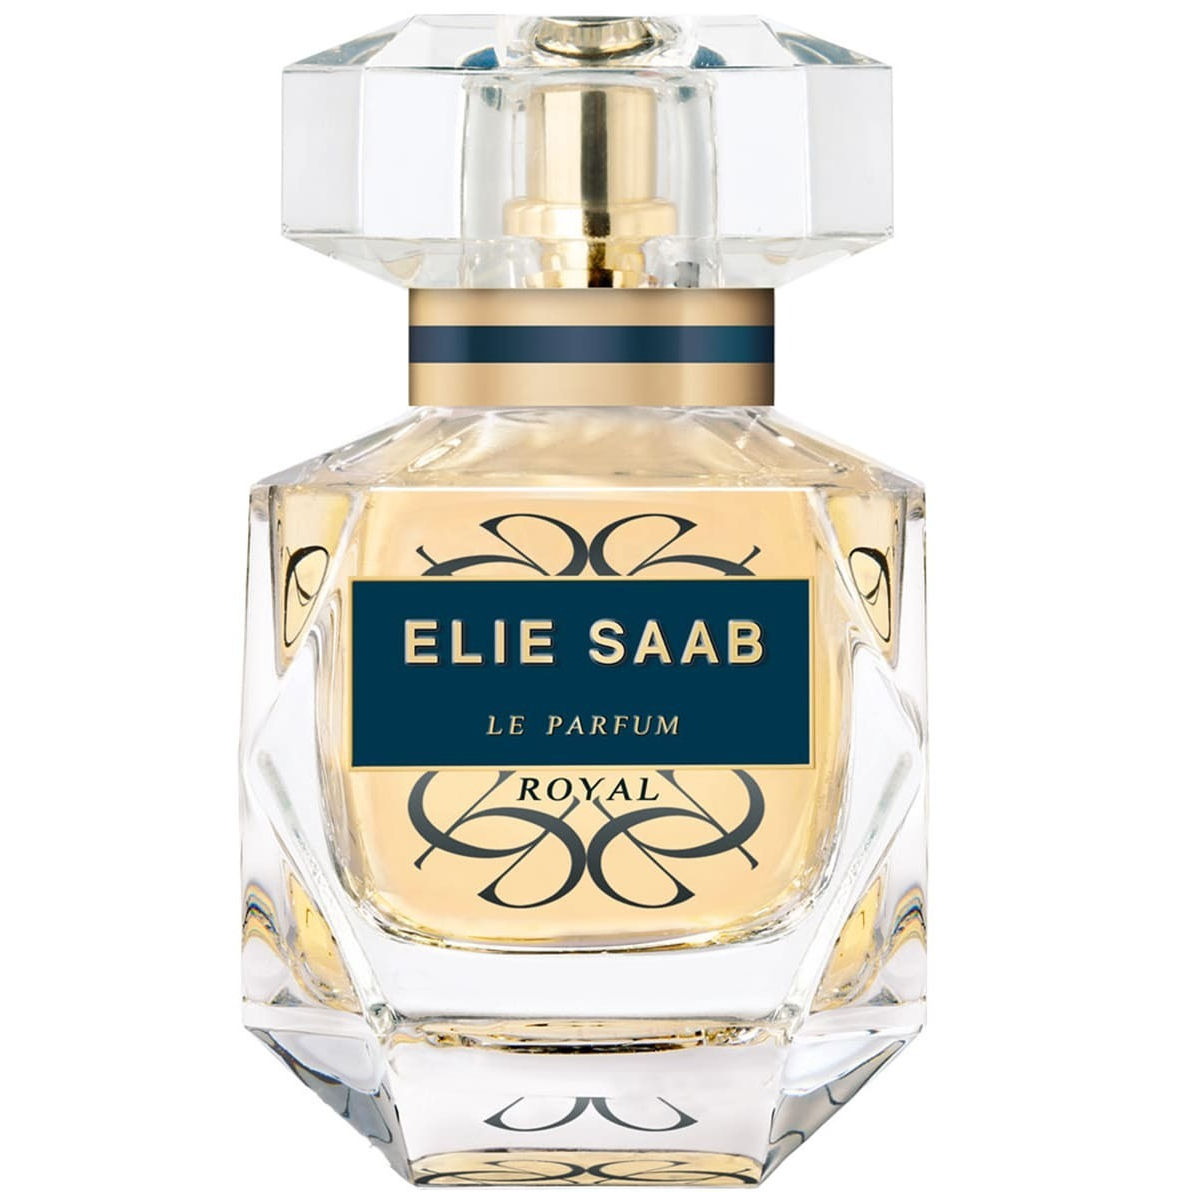 Elie Saab Le Parfum Royal Eau de parfum spray 30 ml